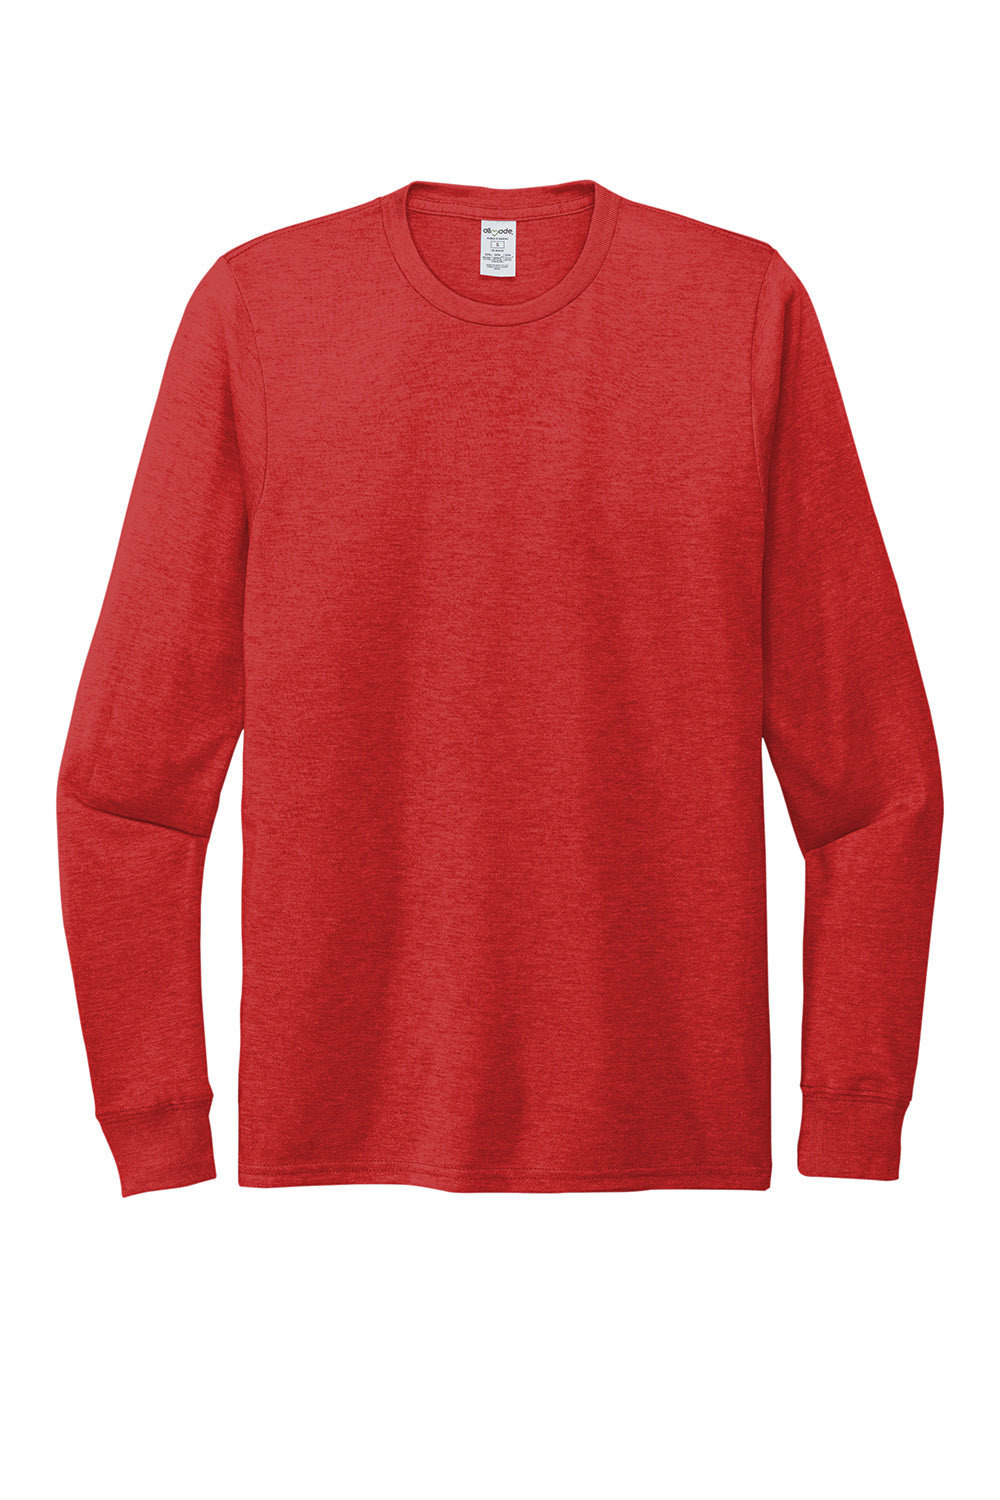 Allmade AL6004 Mens Long Sleeve Crewneck T-Shirt Rise Up Red Flat Front